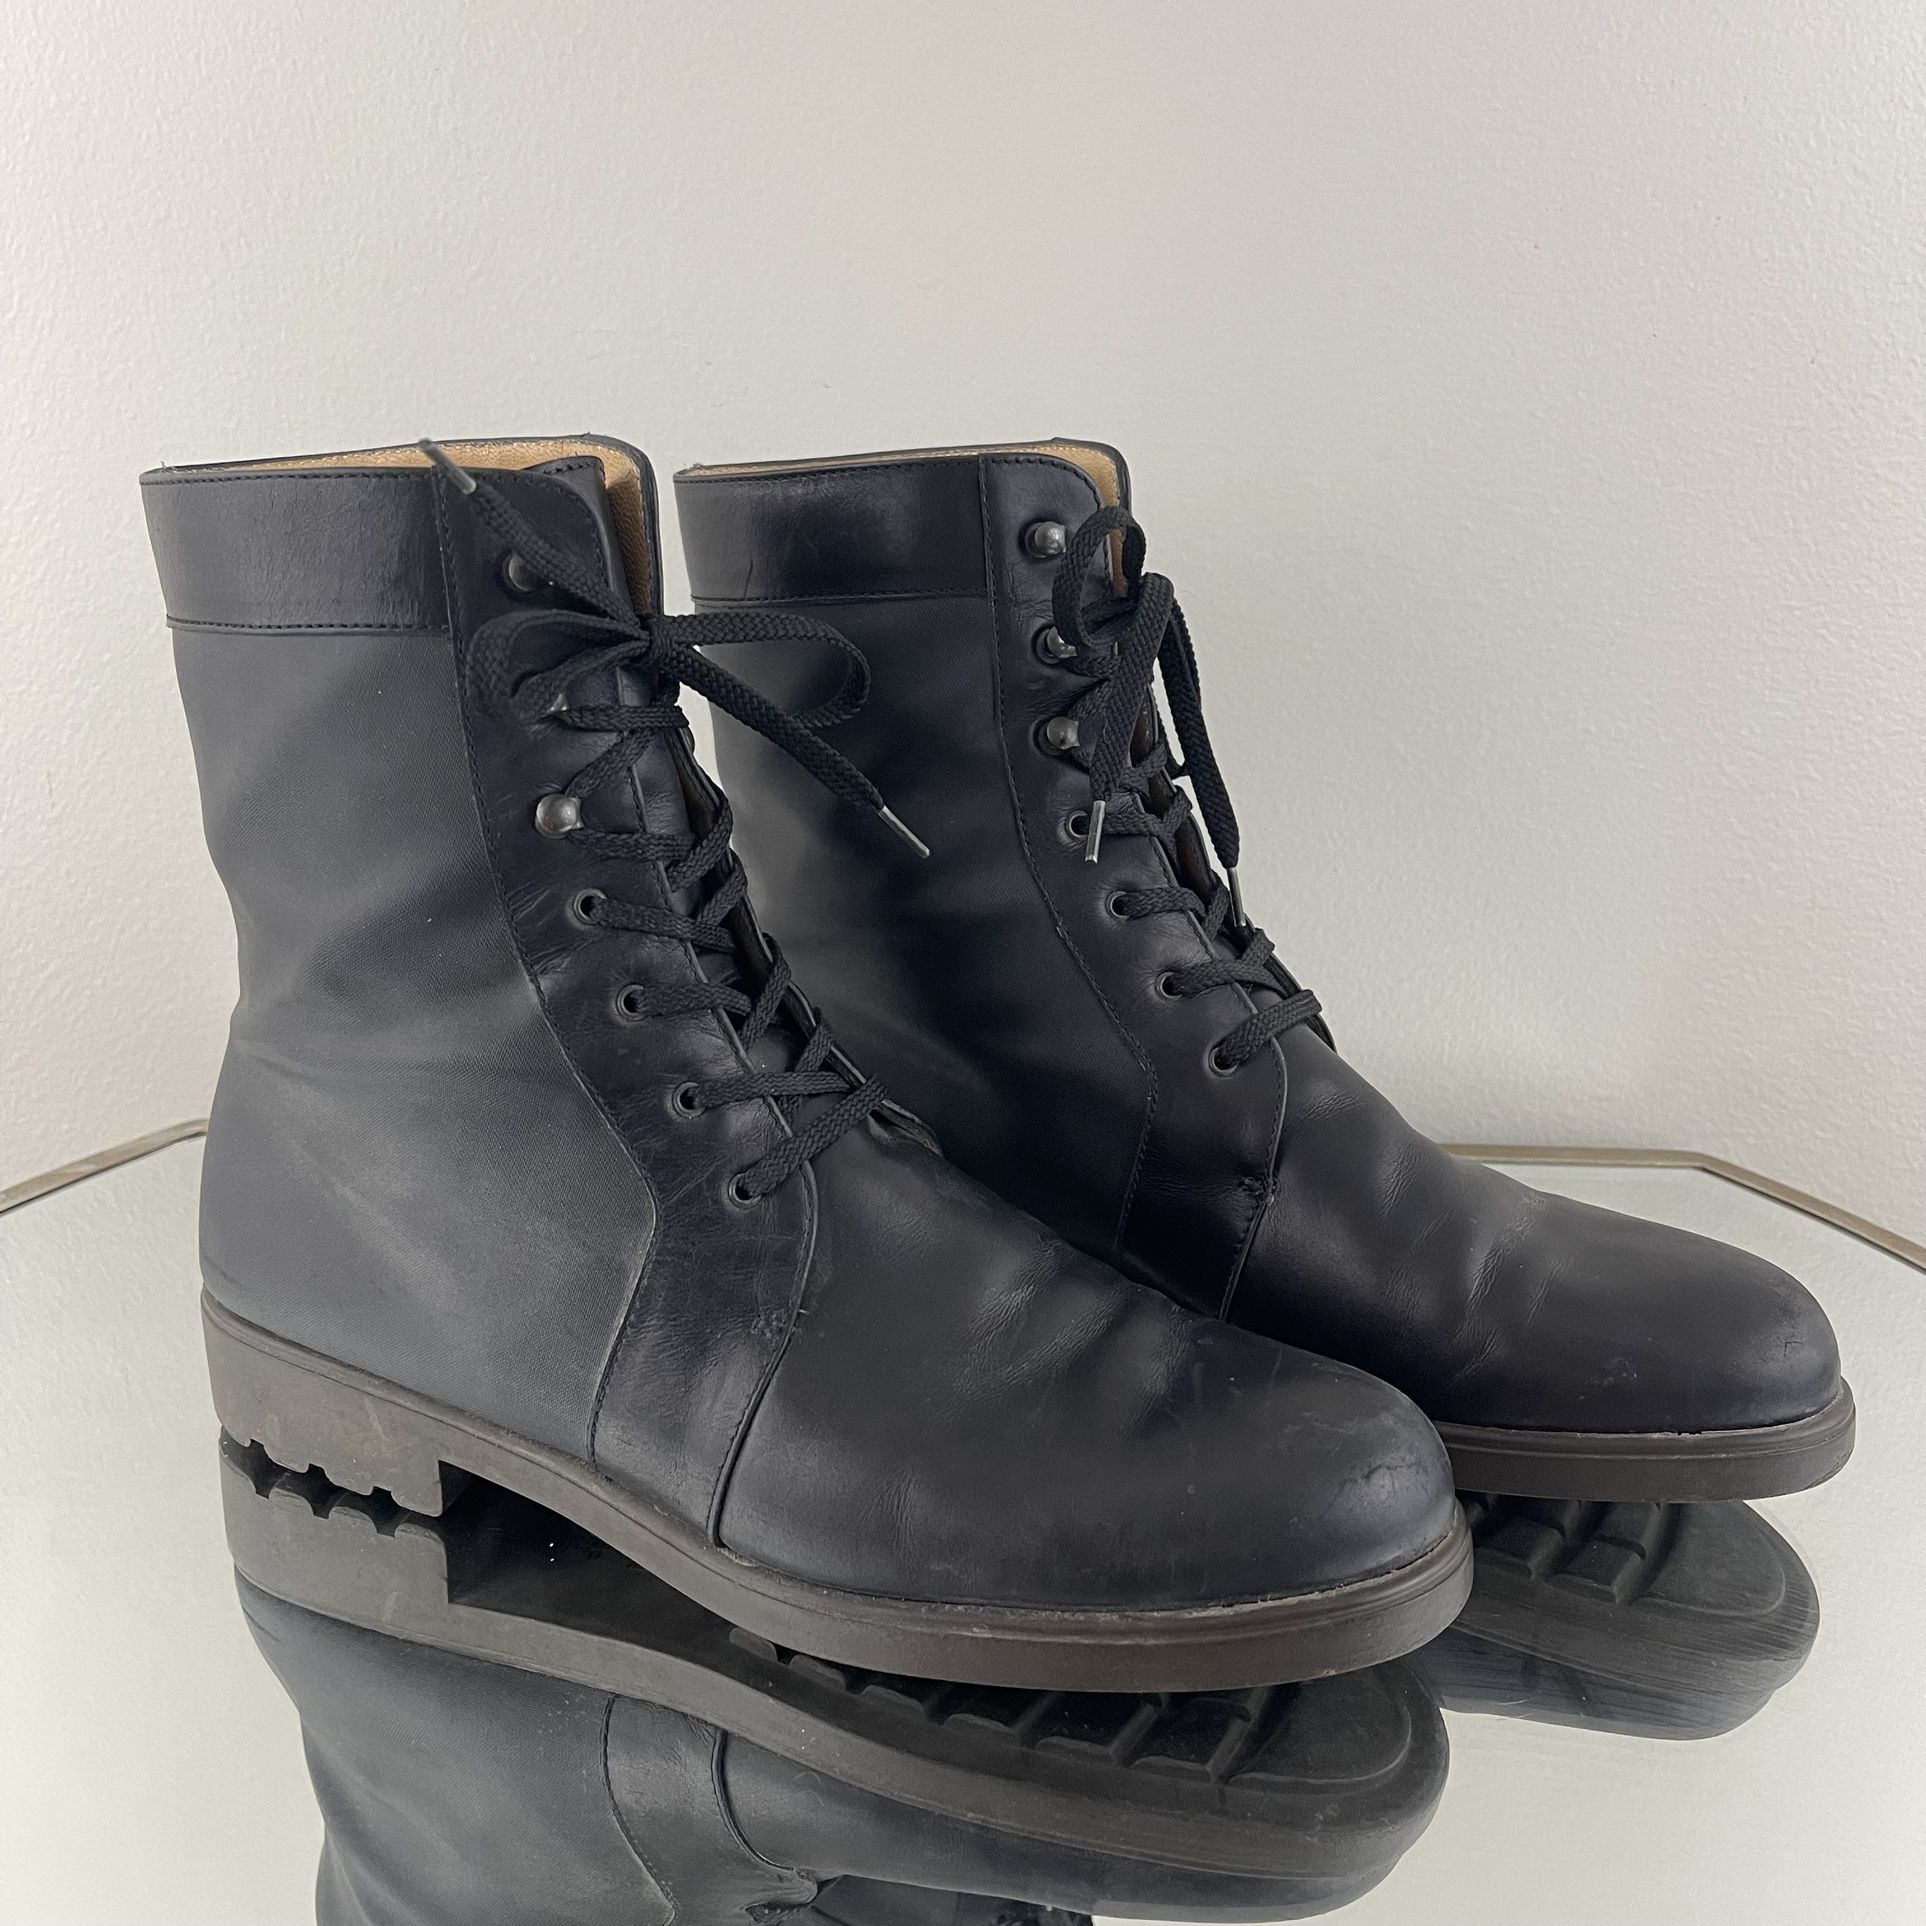 SALVATORE FERRAGAMO Black Leather Microfiber Lace Up Edgy Combat Ankle Boots